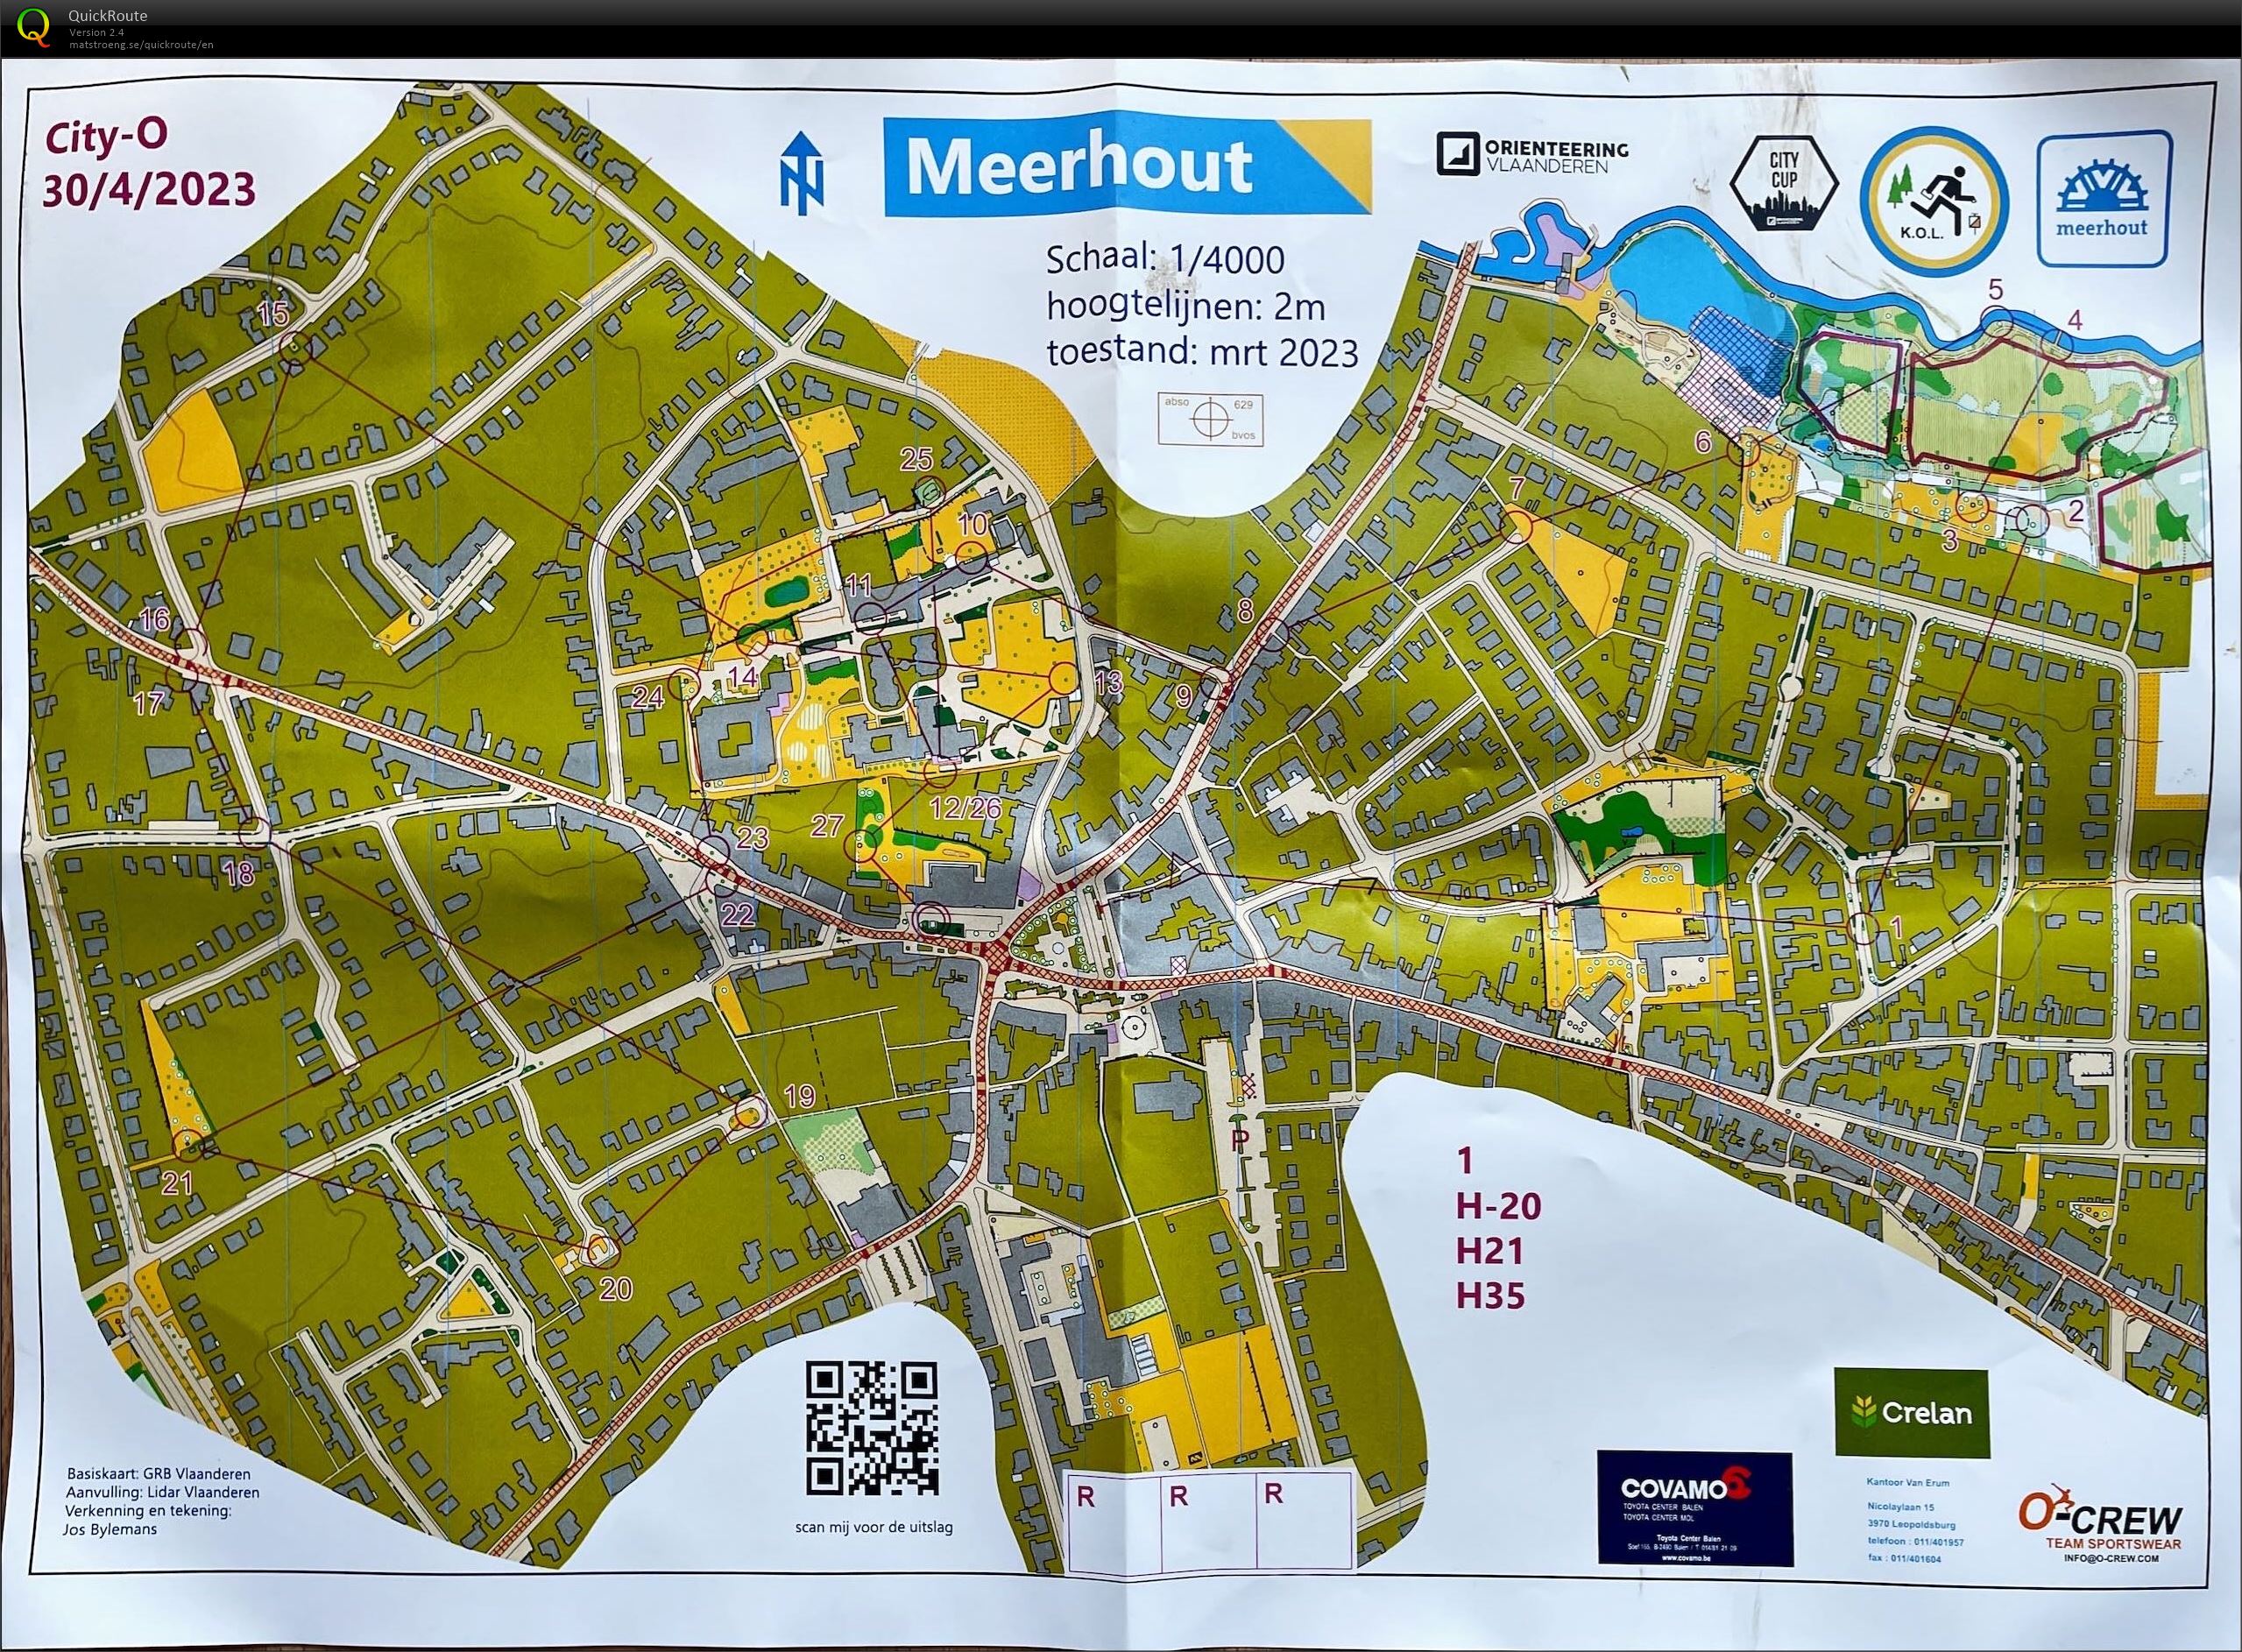 City-O Meerhout (30/04/2023)